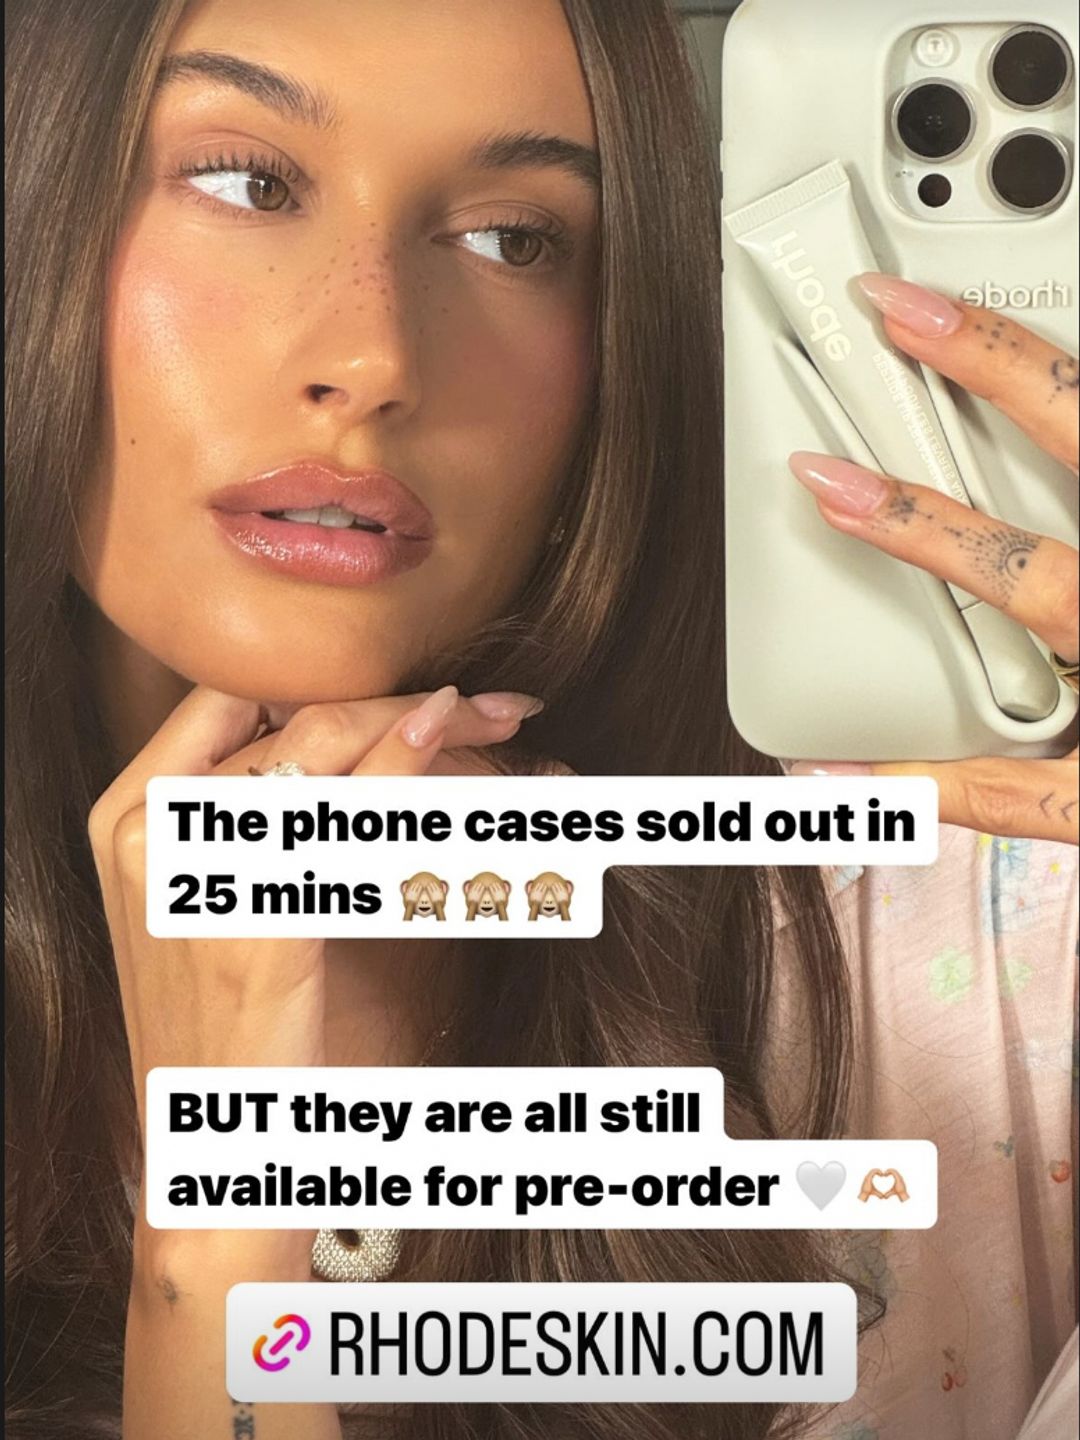 Hailey Bieber taking a selfie with her lip balm holder phone case 